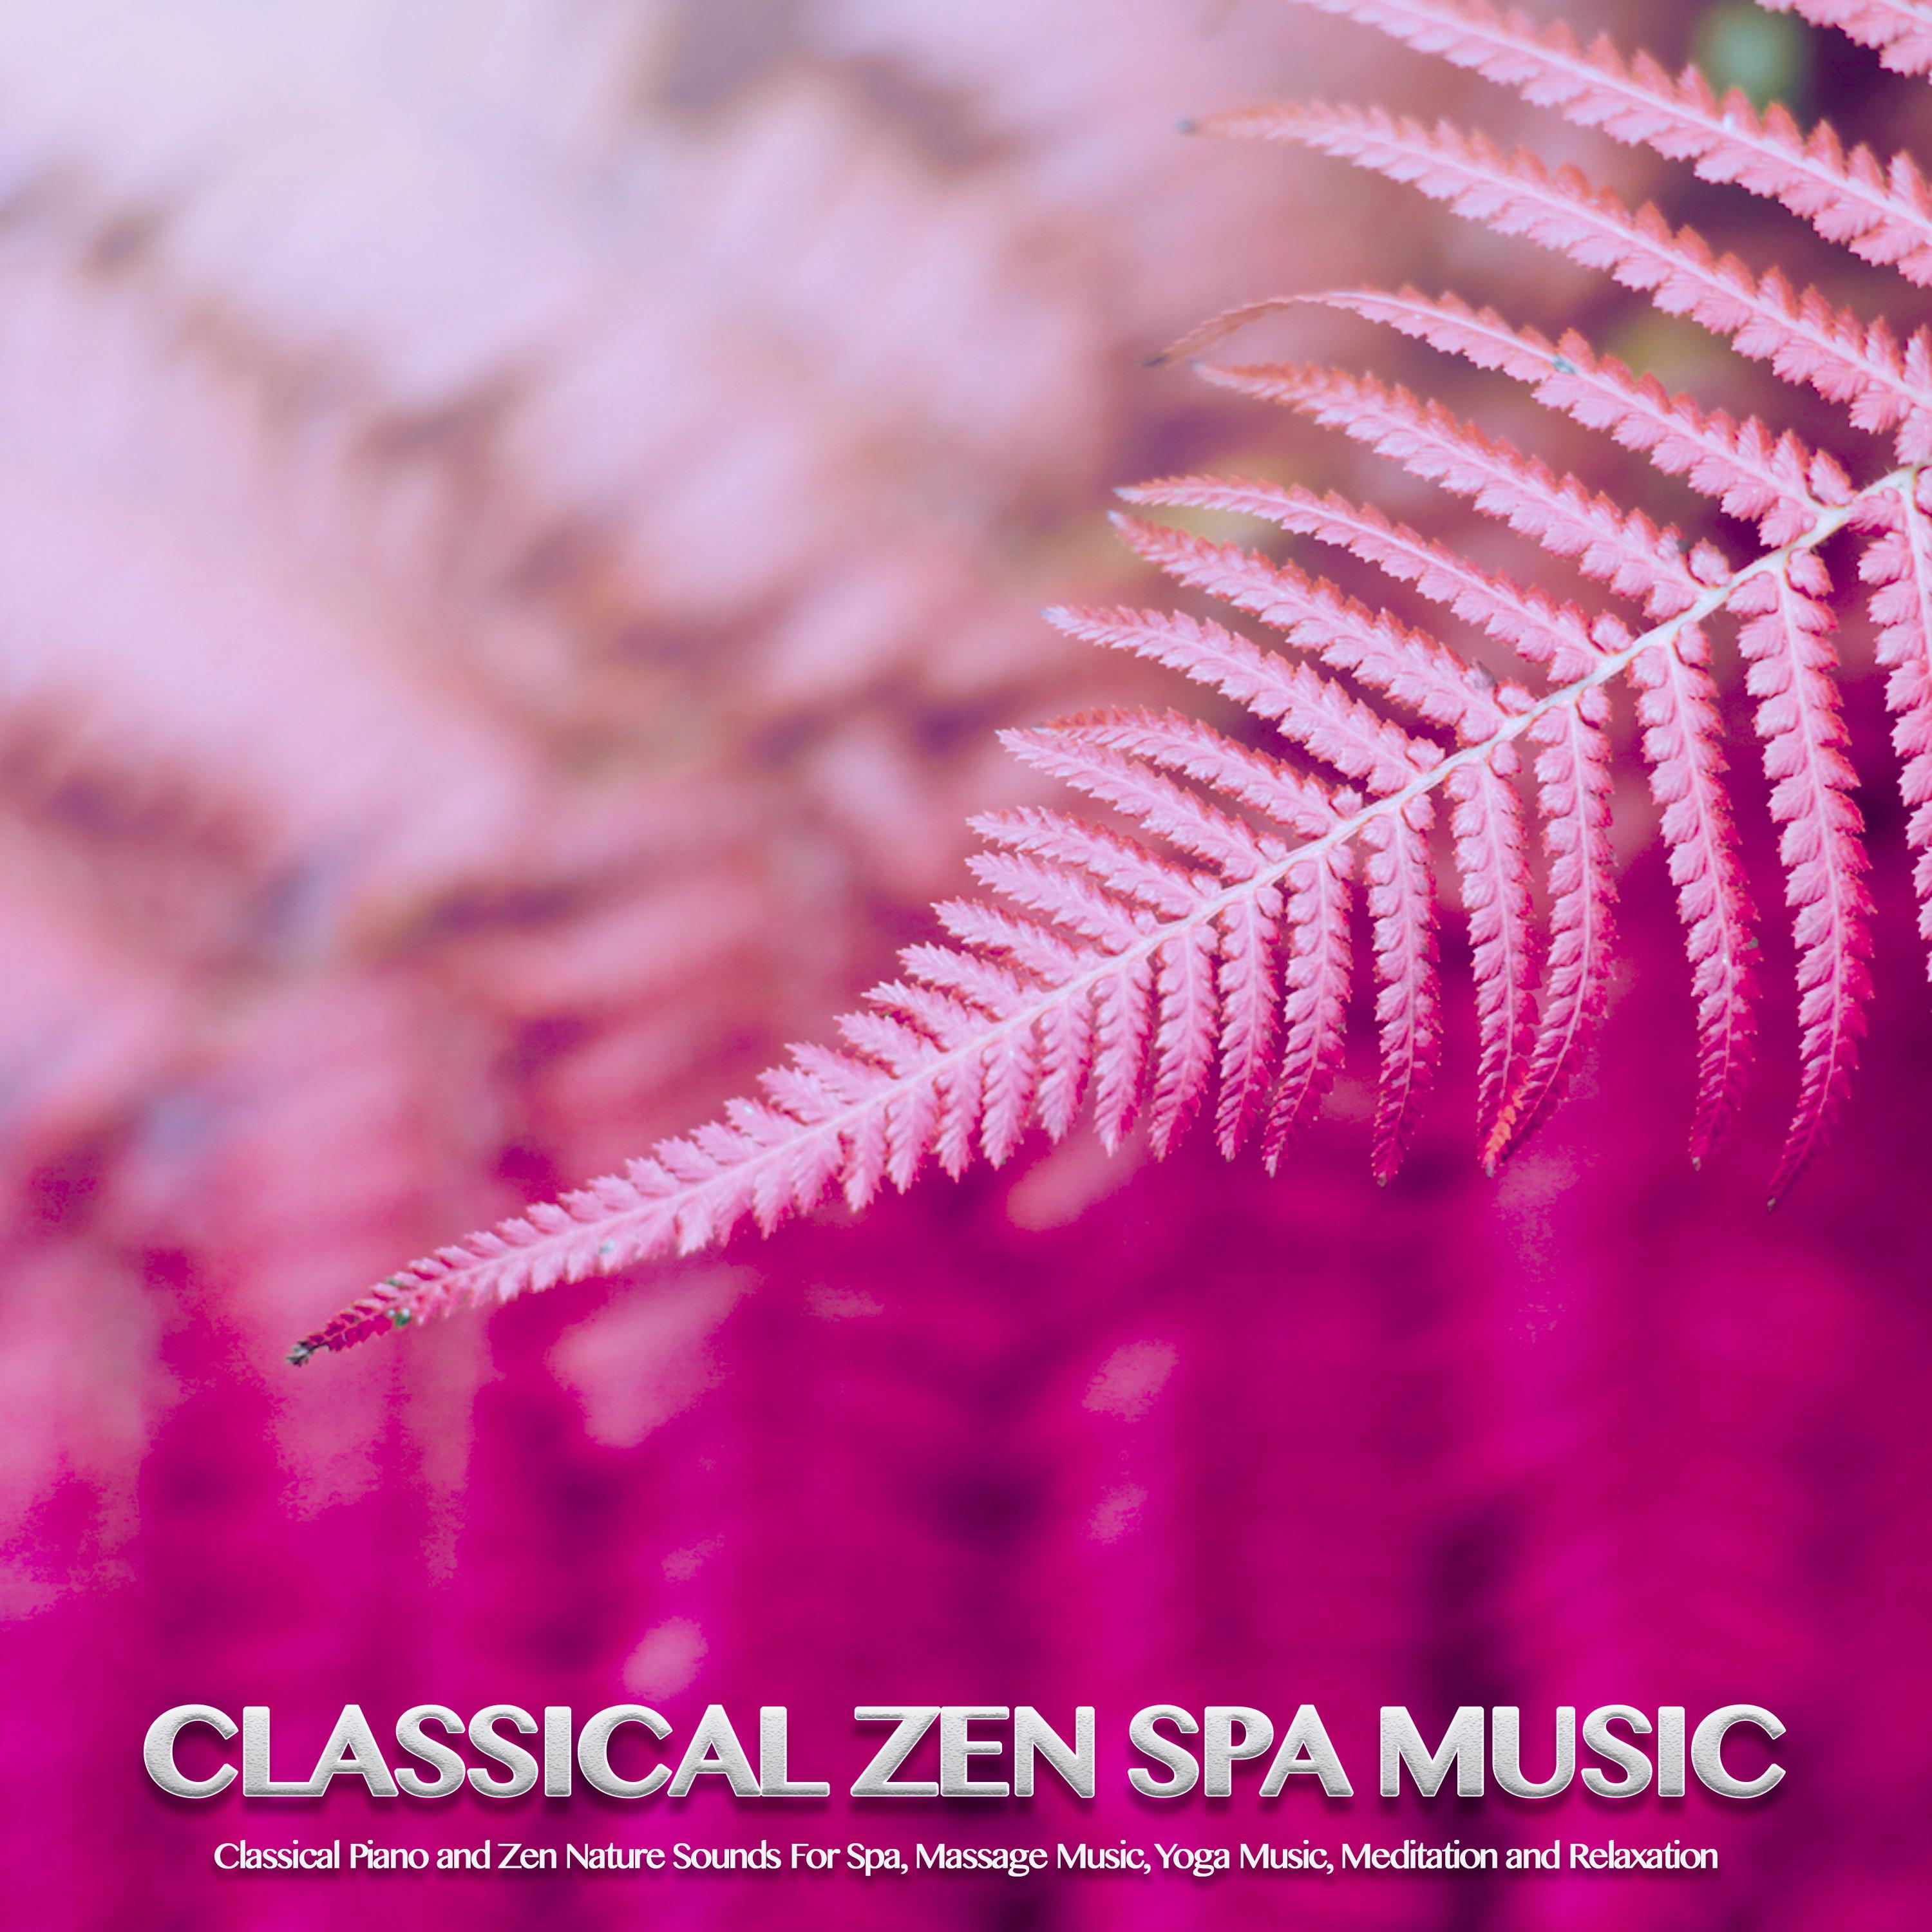 Op.30 Adagio - Mendelssohn - Classical Piano - Spa Music and Nature Sounds